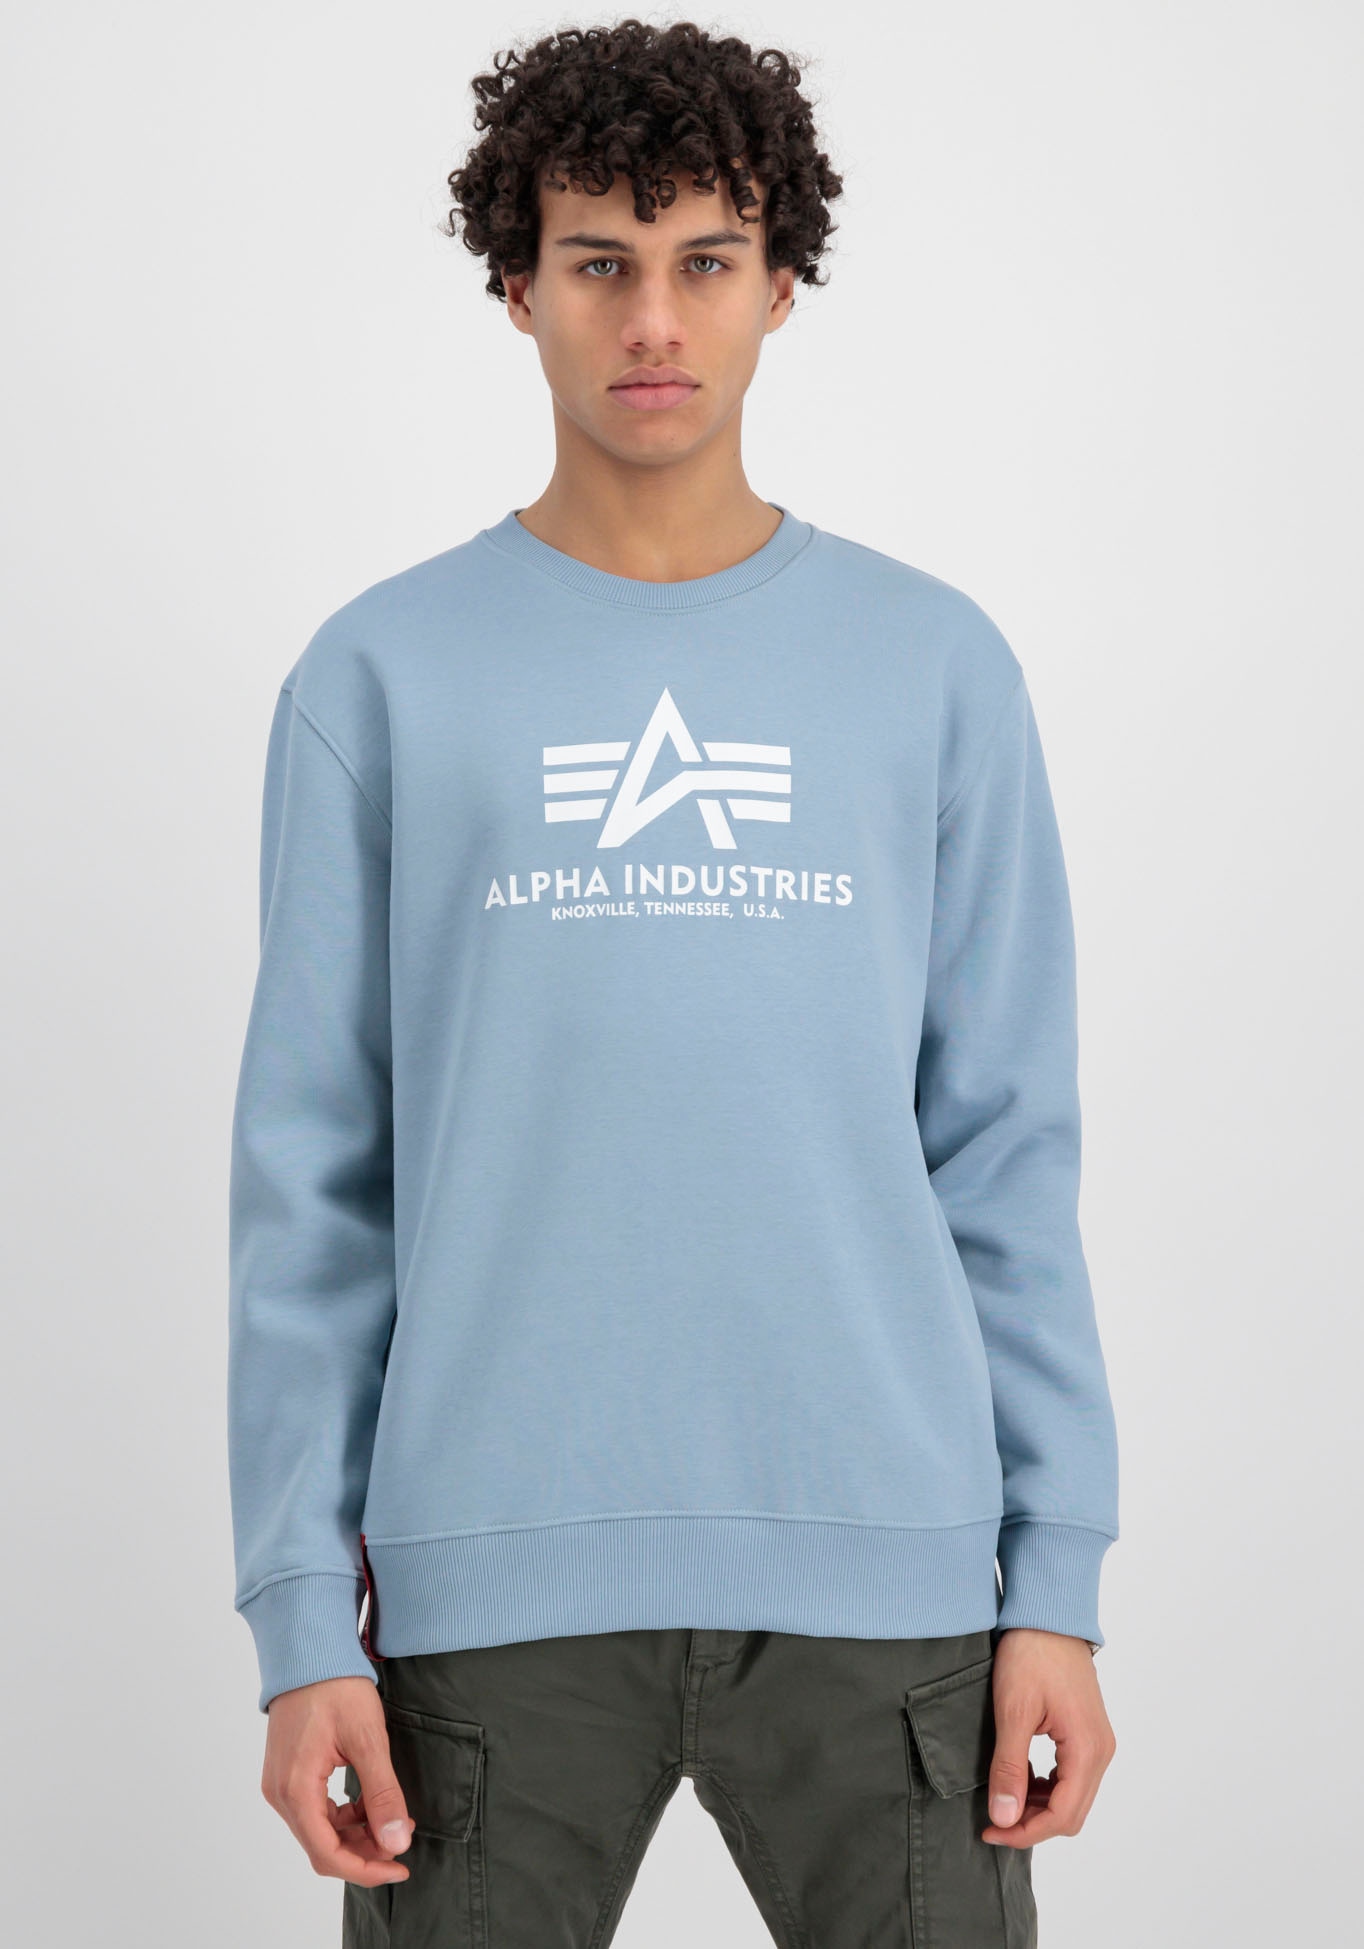 Trouver sur Sweatshirt Sweater« »Basic Industries Alpha